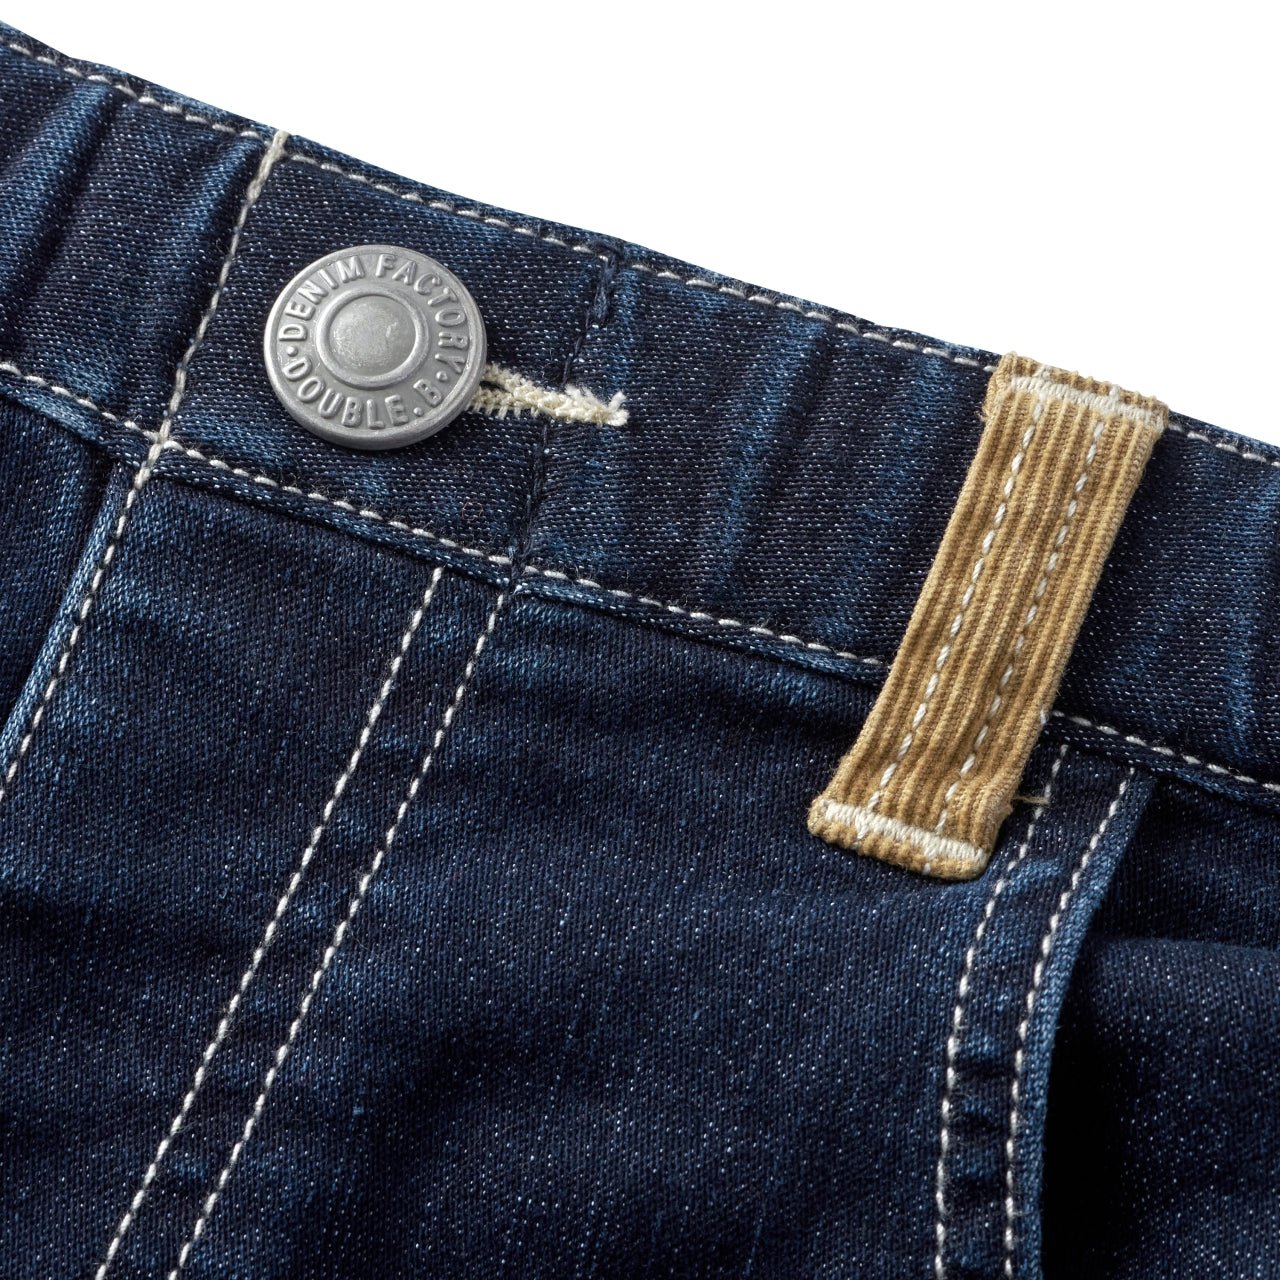 DOUBLE_B Kaihara Indigo Jeans - 63-3203-575-33-90